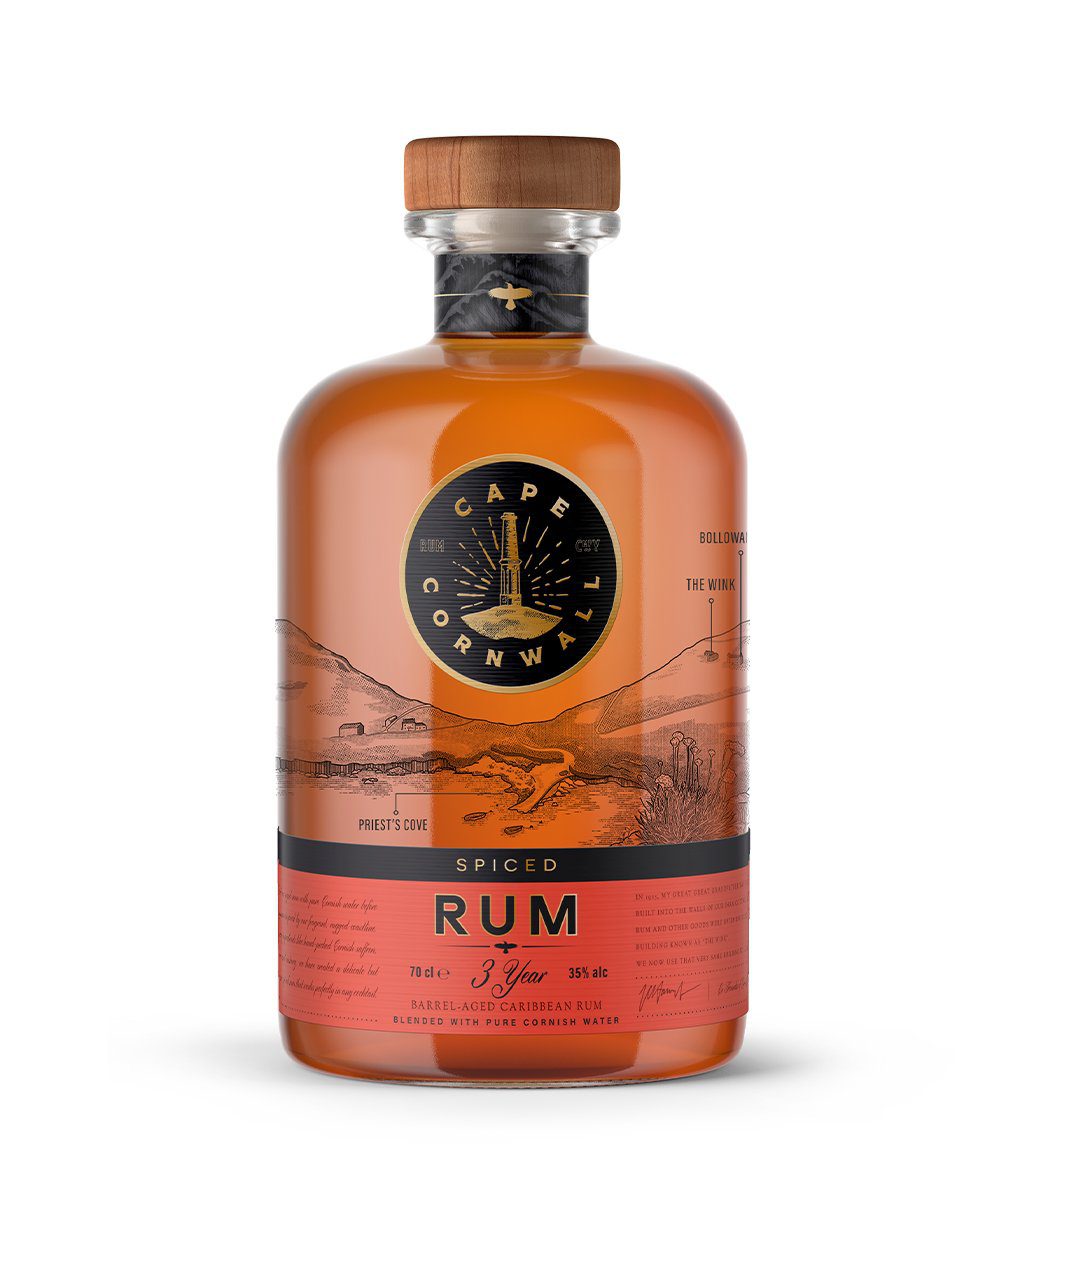 Cape Cornwall Rum Design and Branding